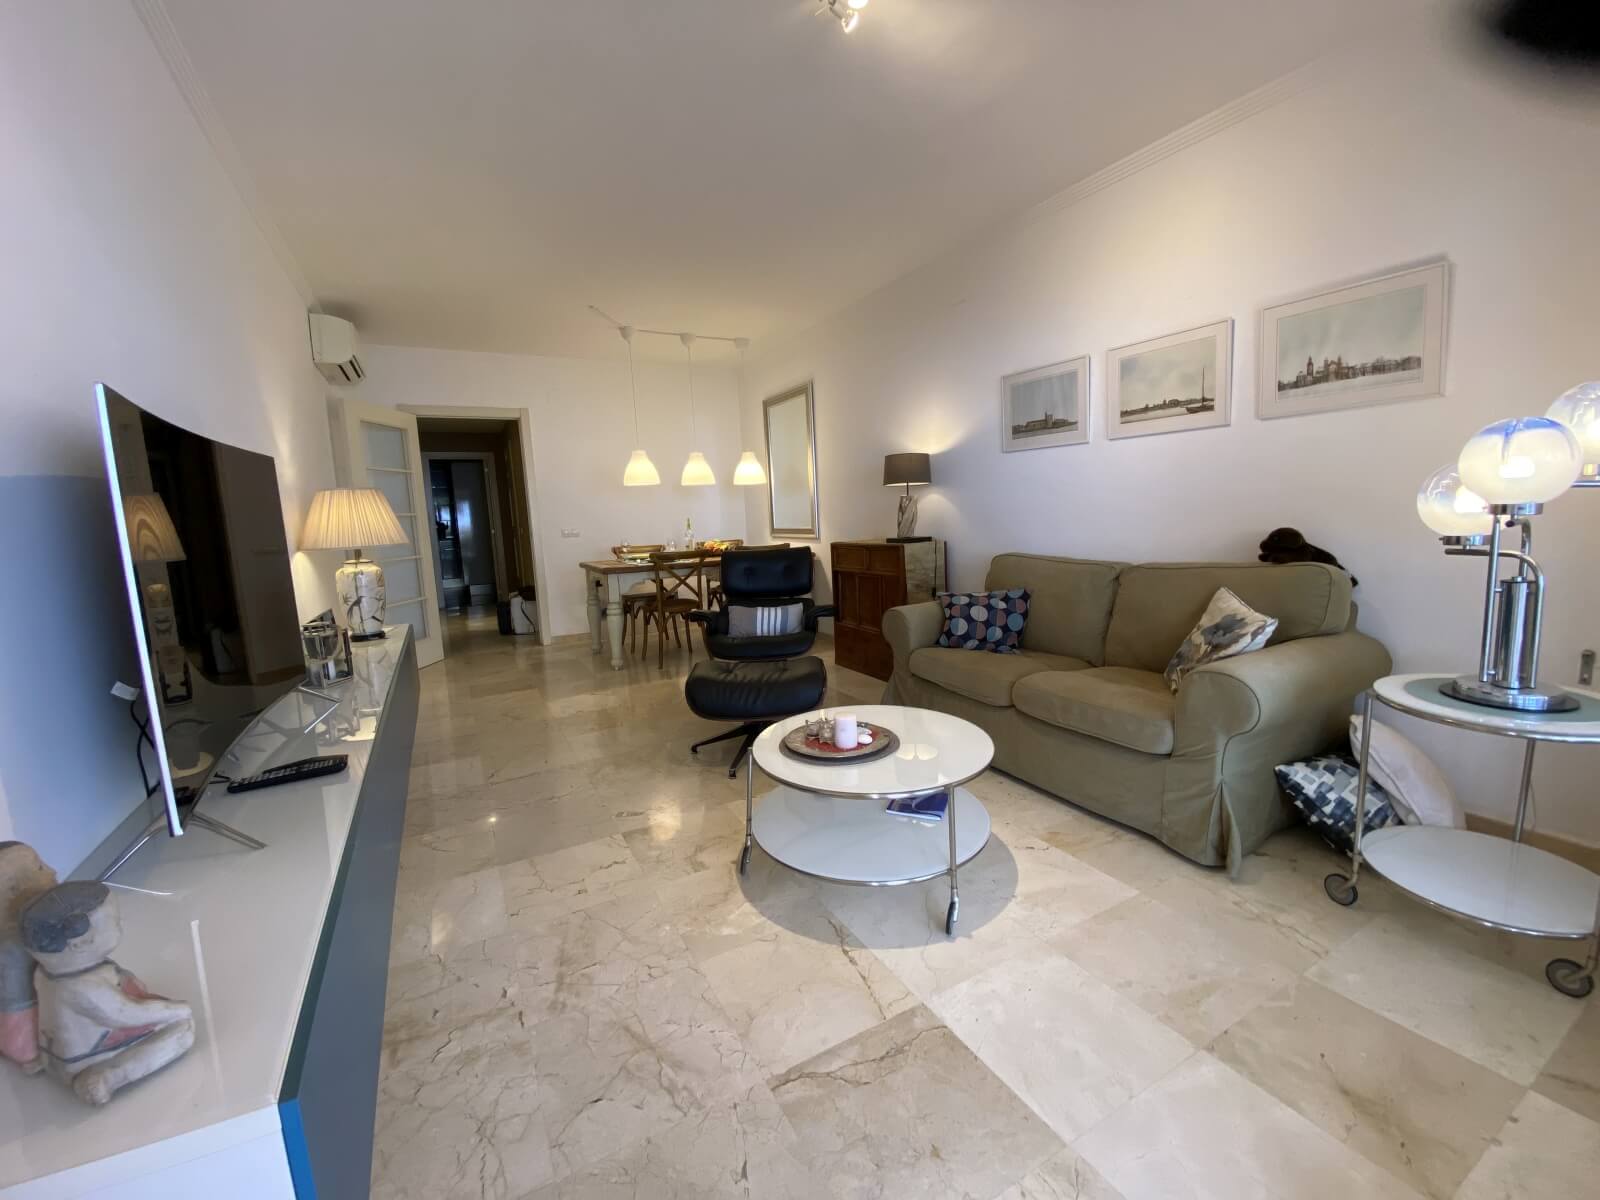 Salón de un apartamento junto al mar en España Picasso